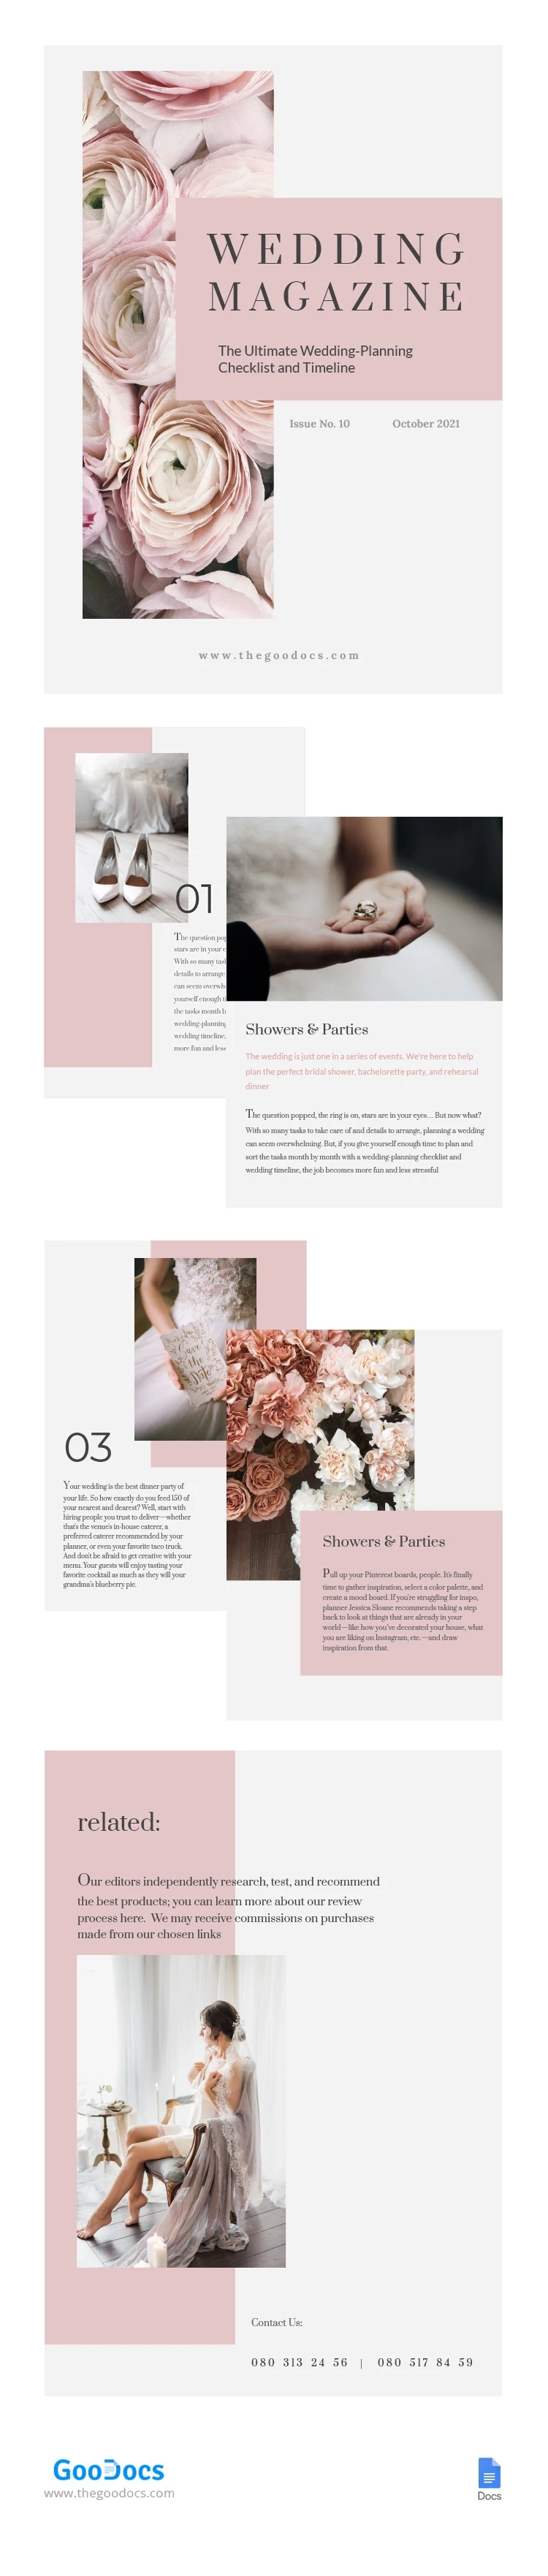 Wedding Magazine - free Google Docs Template - 10062248